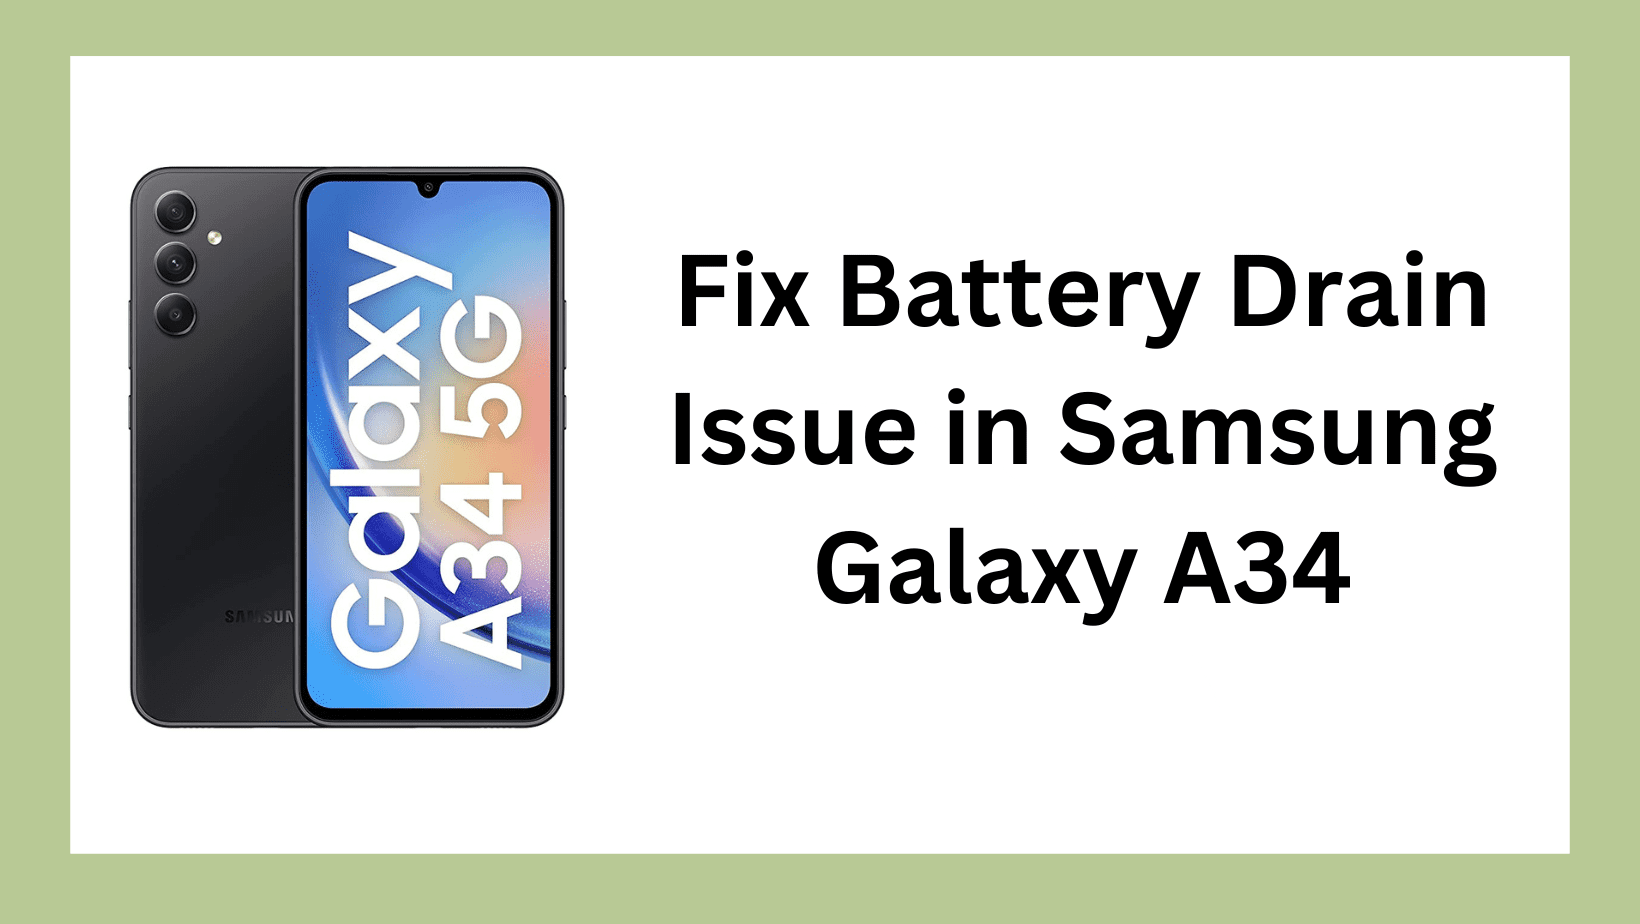 Fix Battery Drain Issue in Samsung Galaxy A34